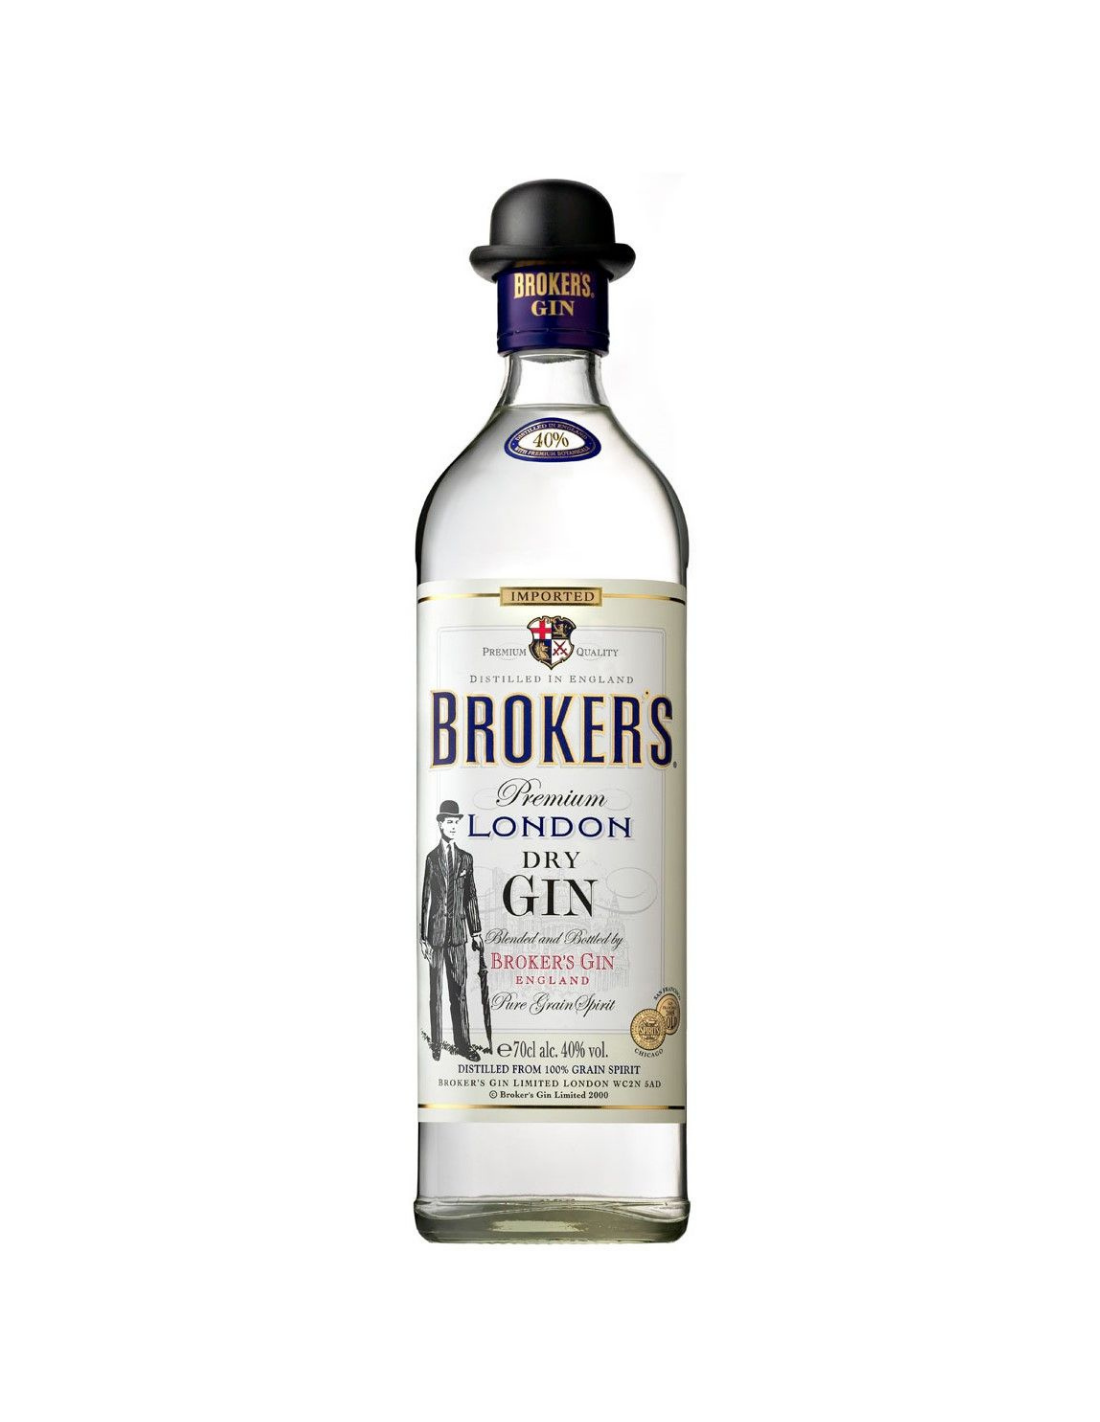 Gin Broker’s, 40% alc., 0.7L, Marea Britanie alcooldiscount.ro